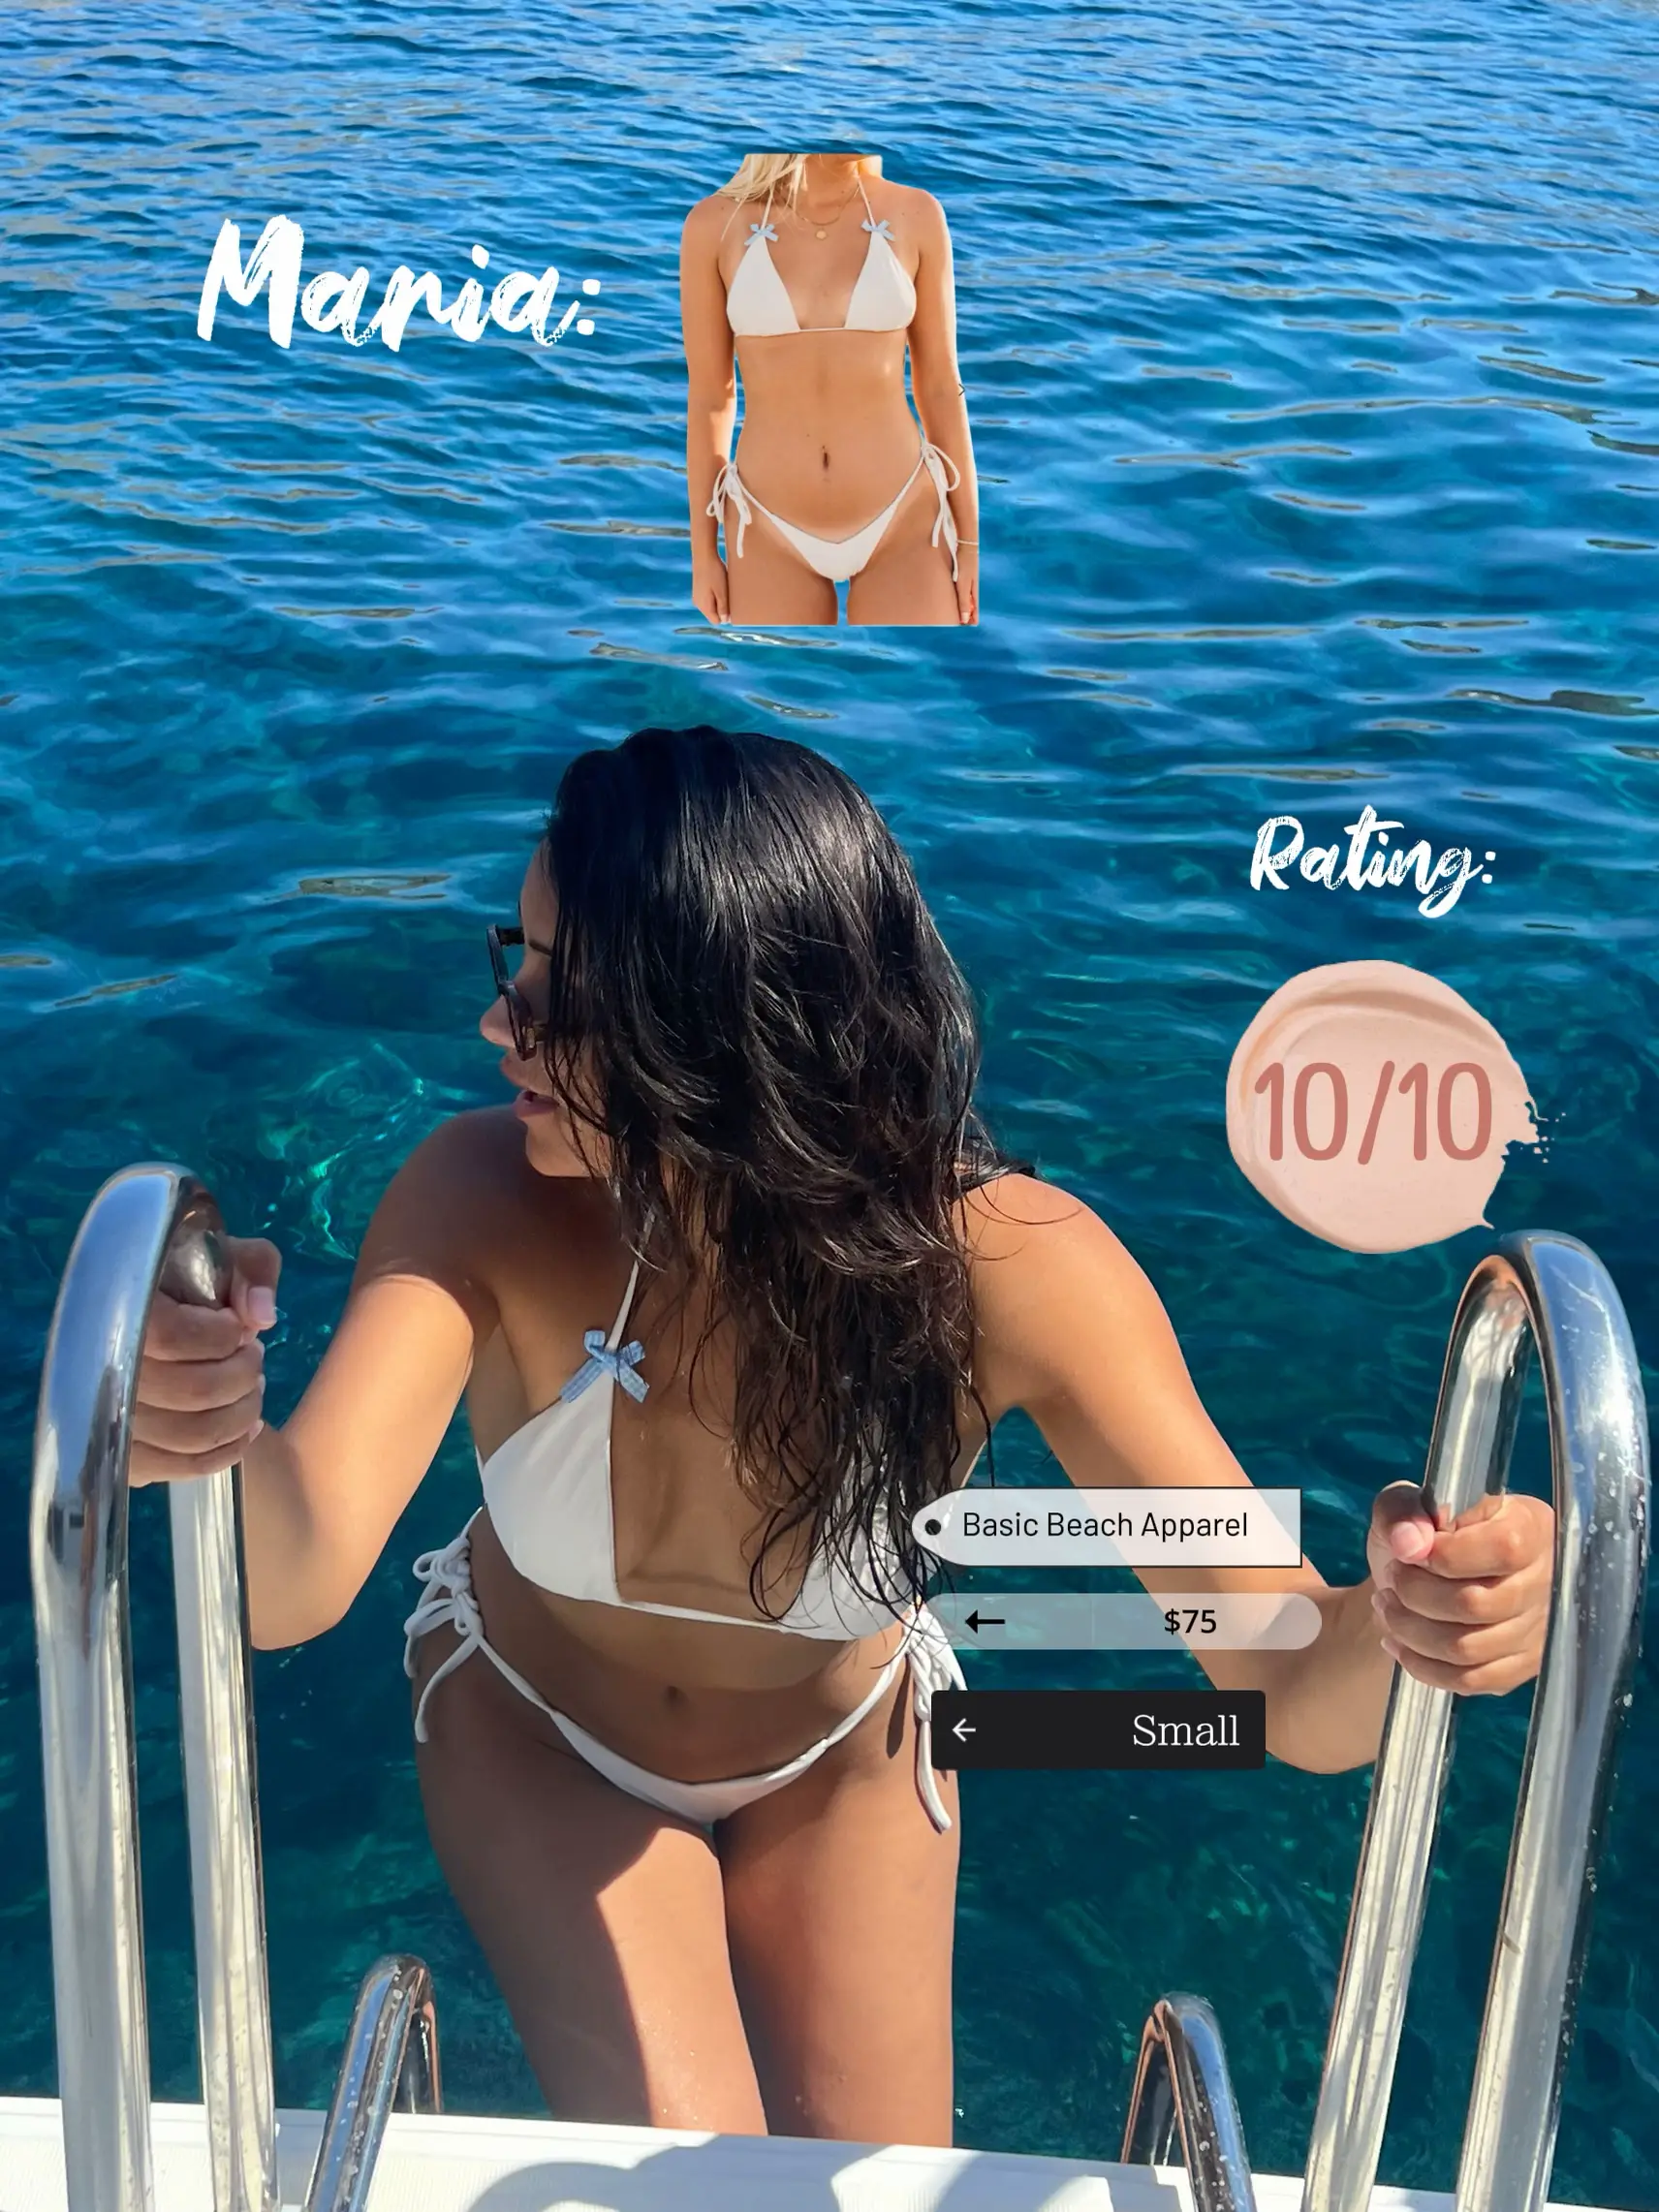 Calzedonia on X: Softer than ever: new MALIBU Bikini! 💚 https